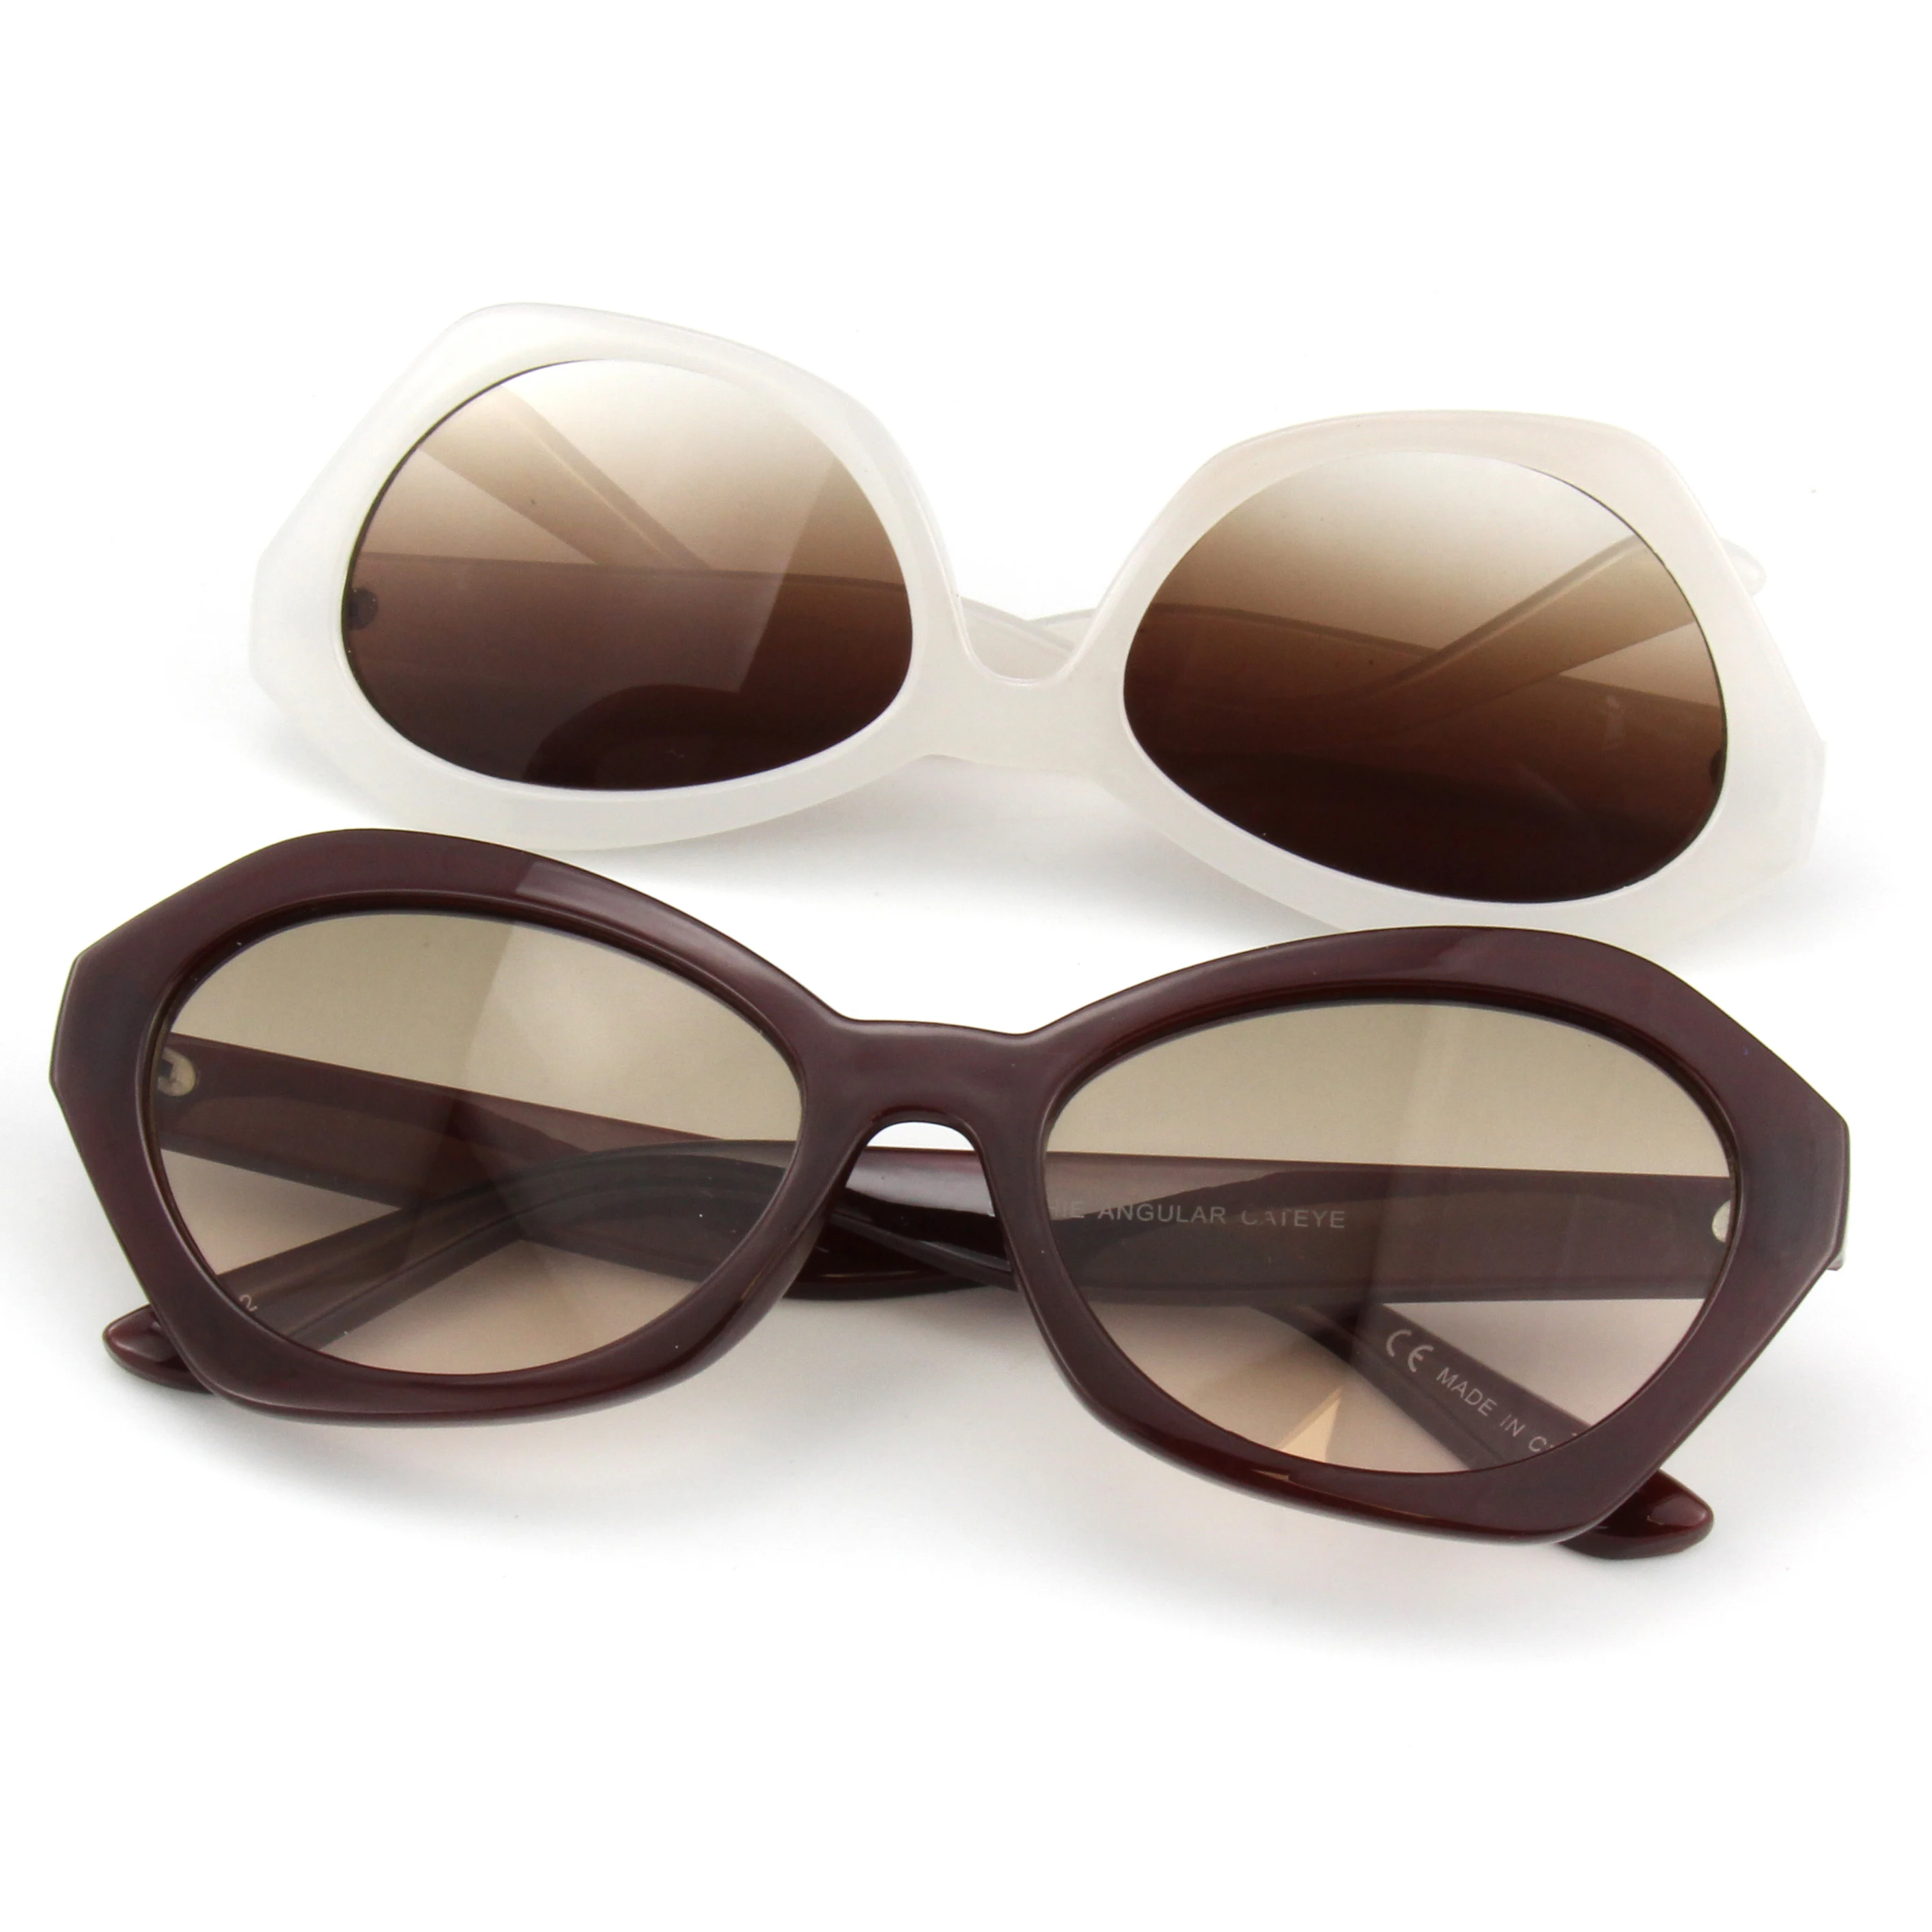 EUGENIA Eyewear 2021 New Arrivals Brand Designer Metal shape Trendy Fashion Sunglasses sun glasses Women